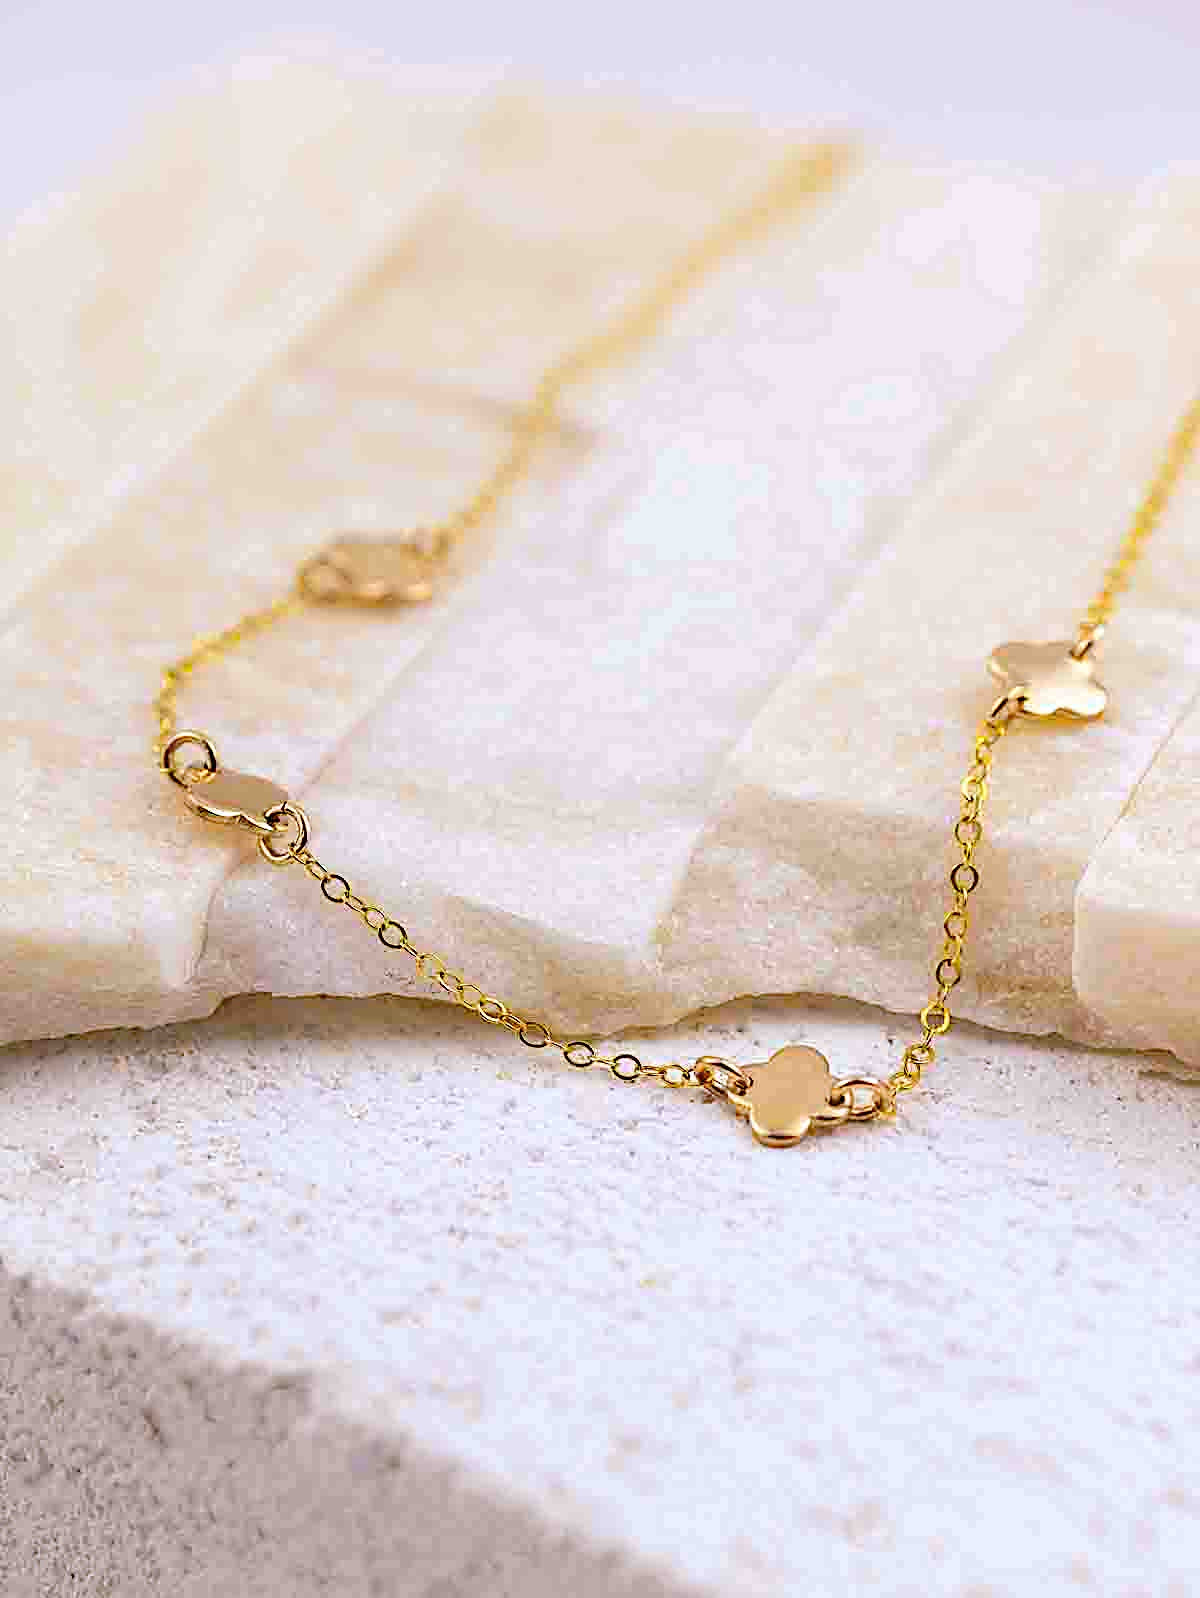 4 leaf clover pendants necklace in gold on brick background